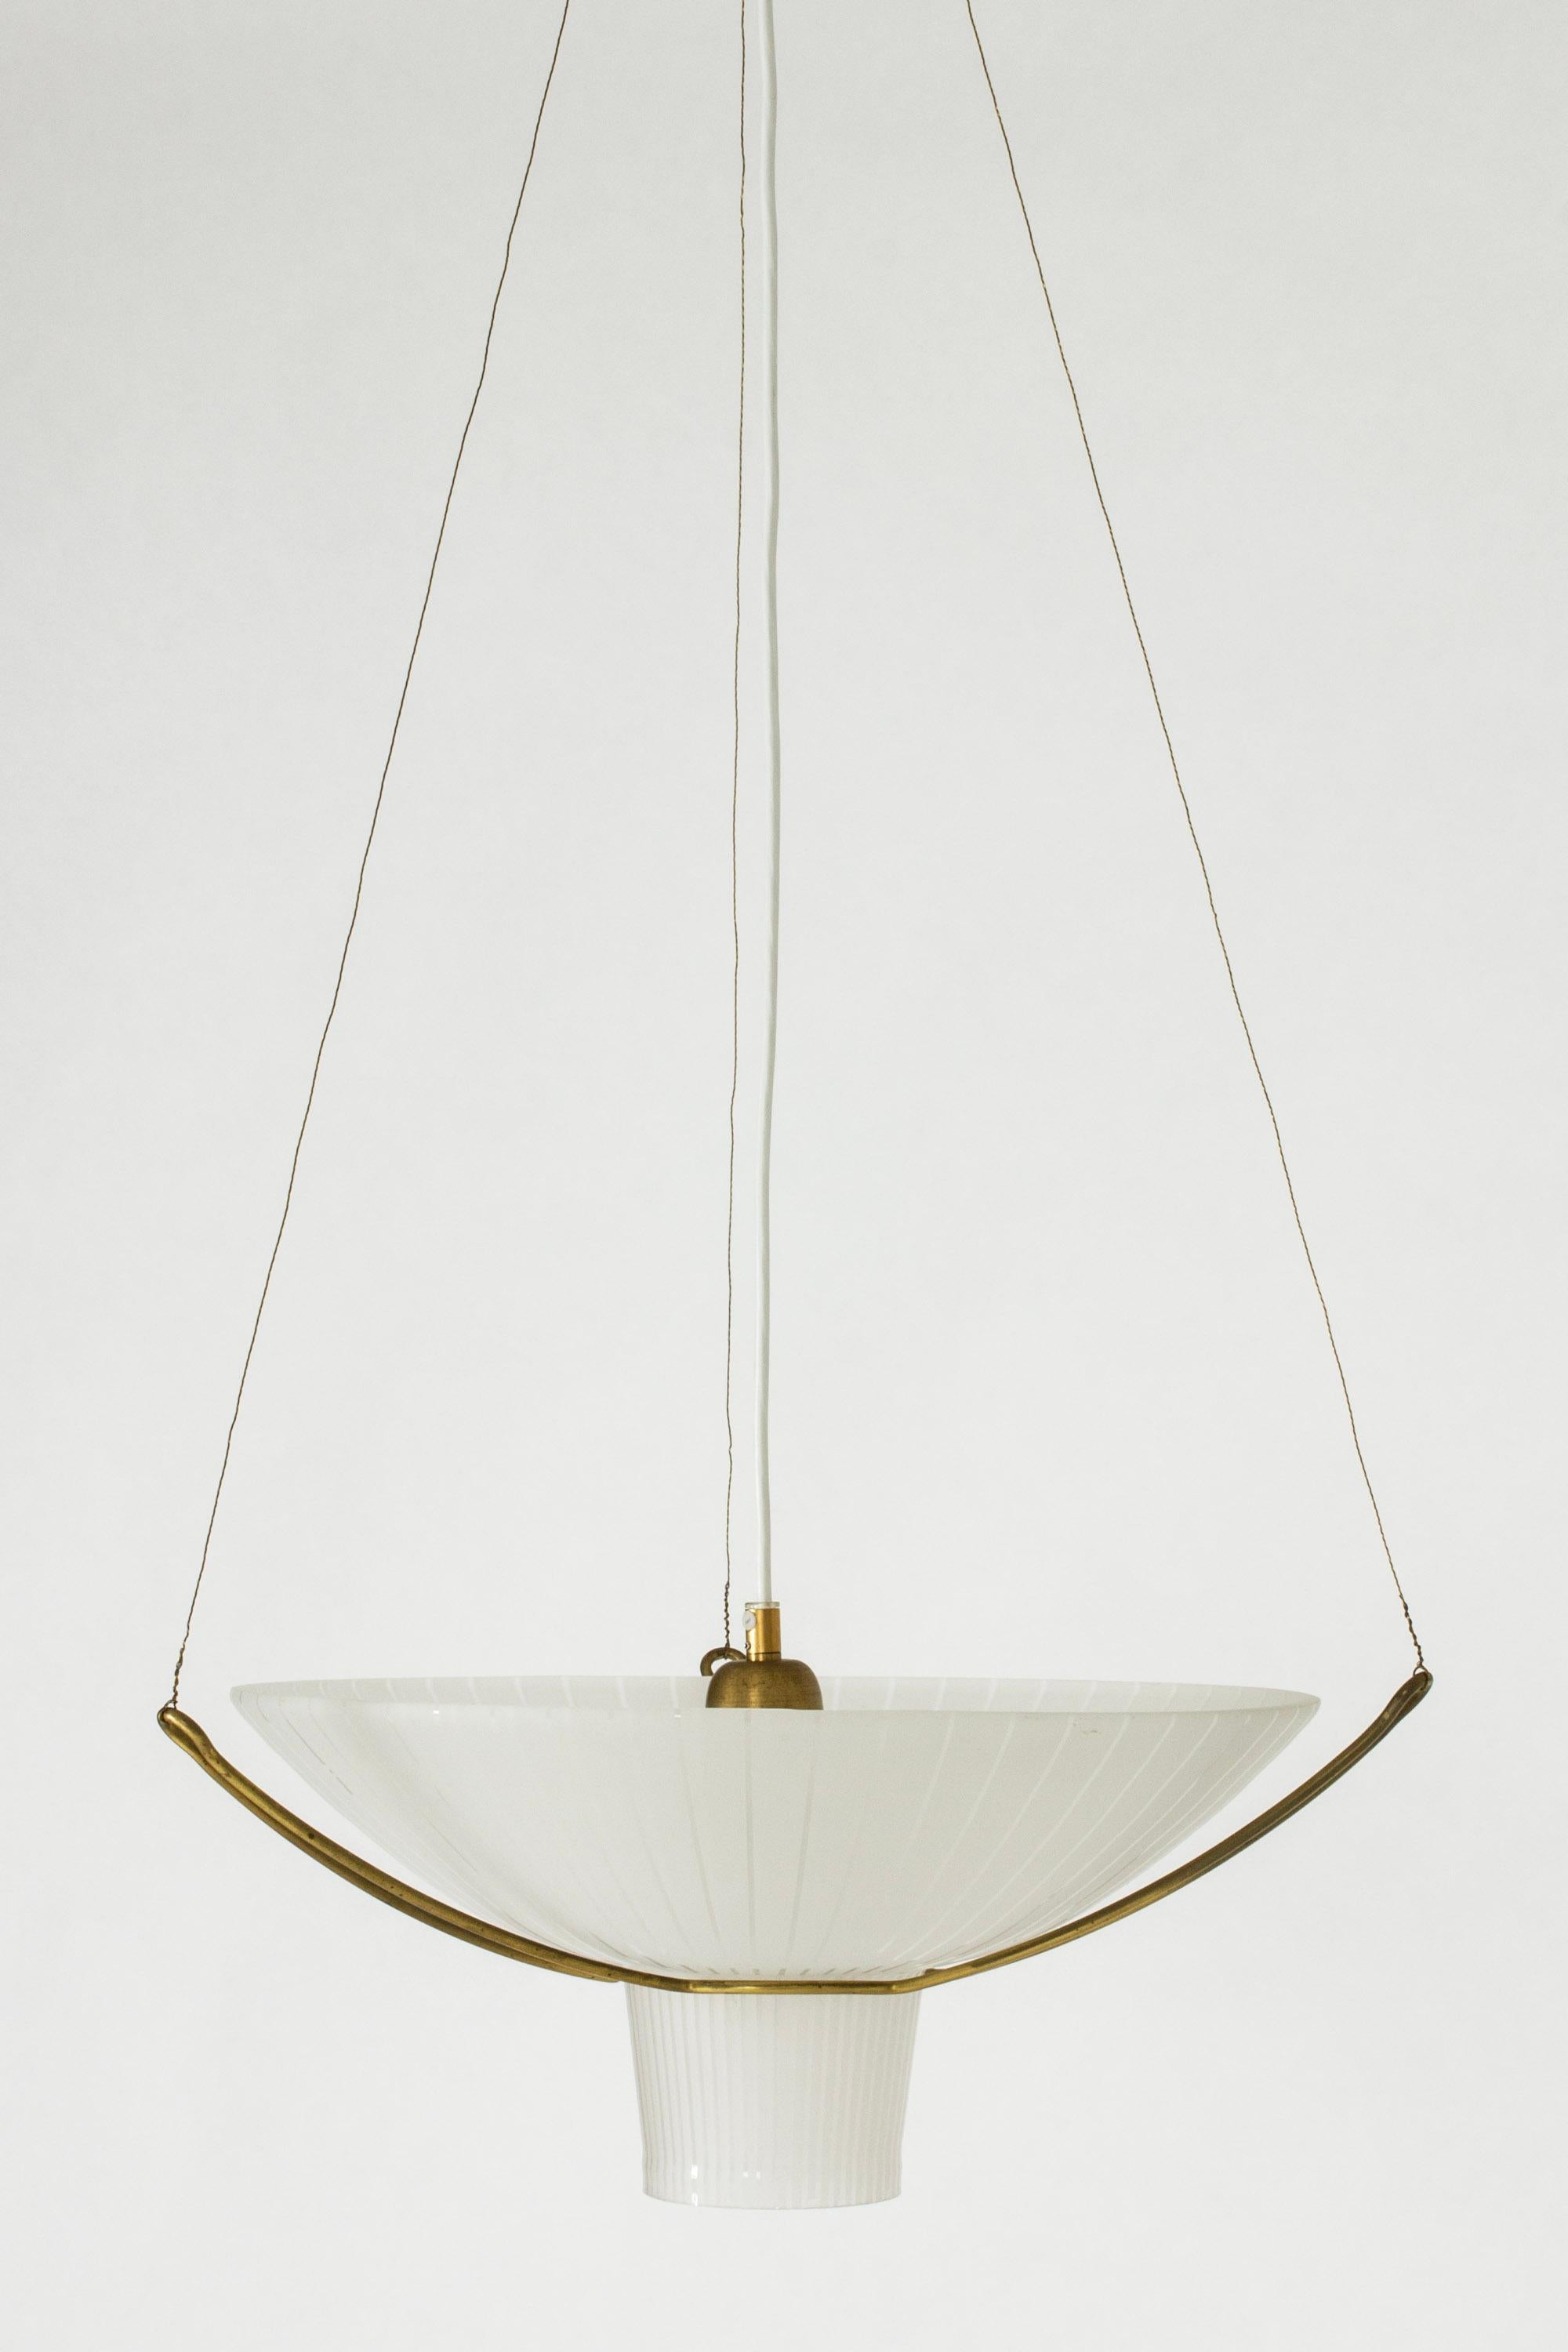 Swedish Midcentury Scandinavian Pendant Lamp by Hans Bergström, Sweden, 1950s For Sale